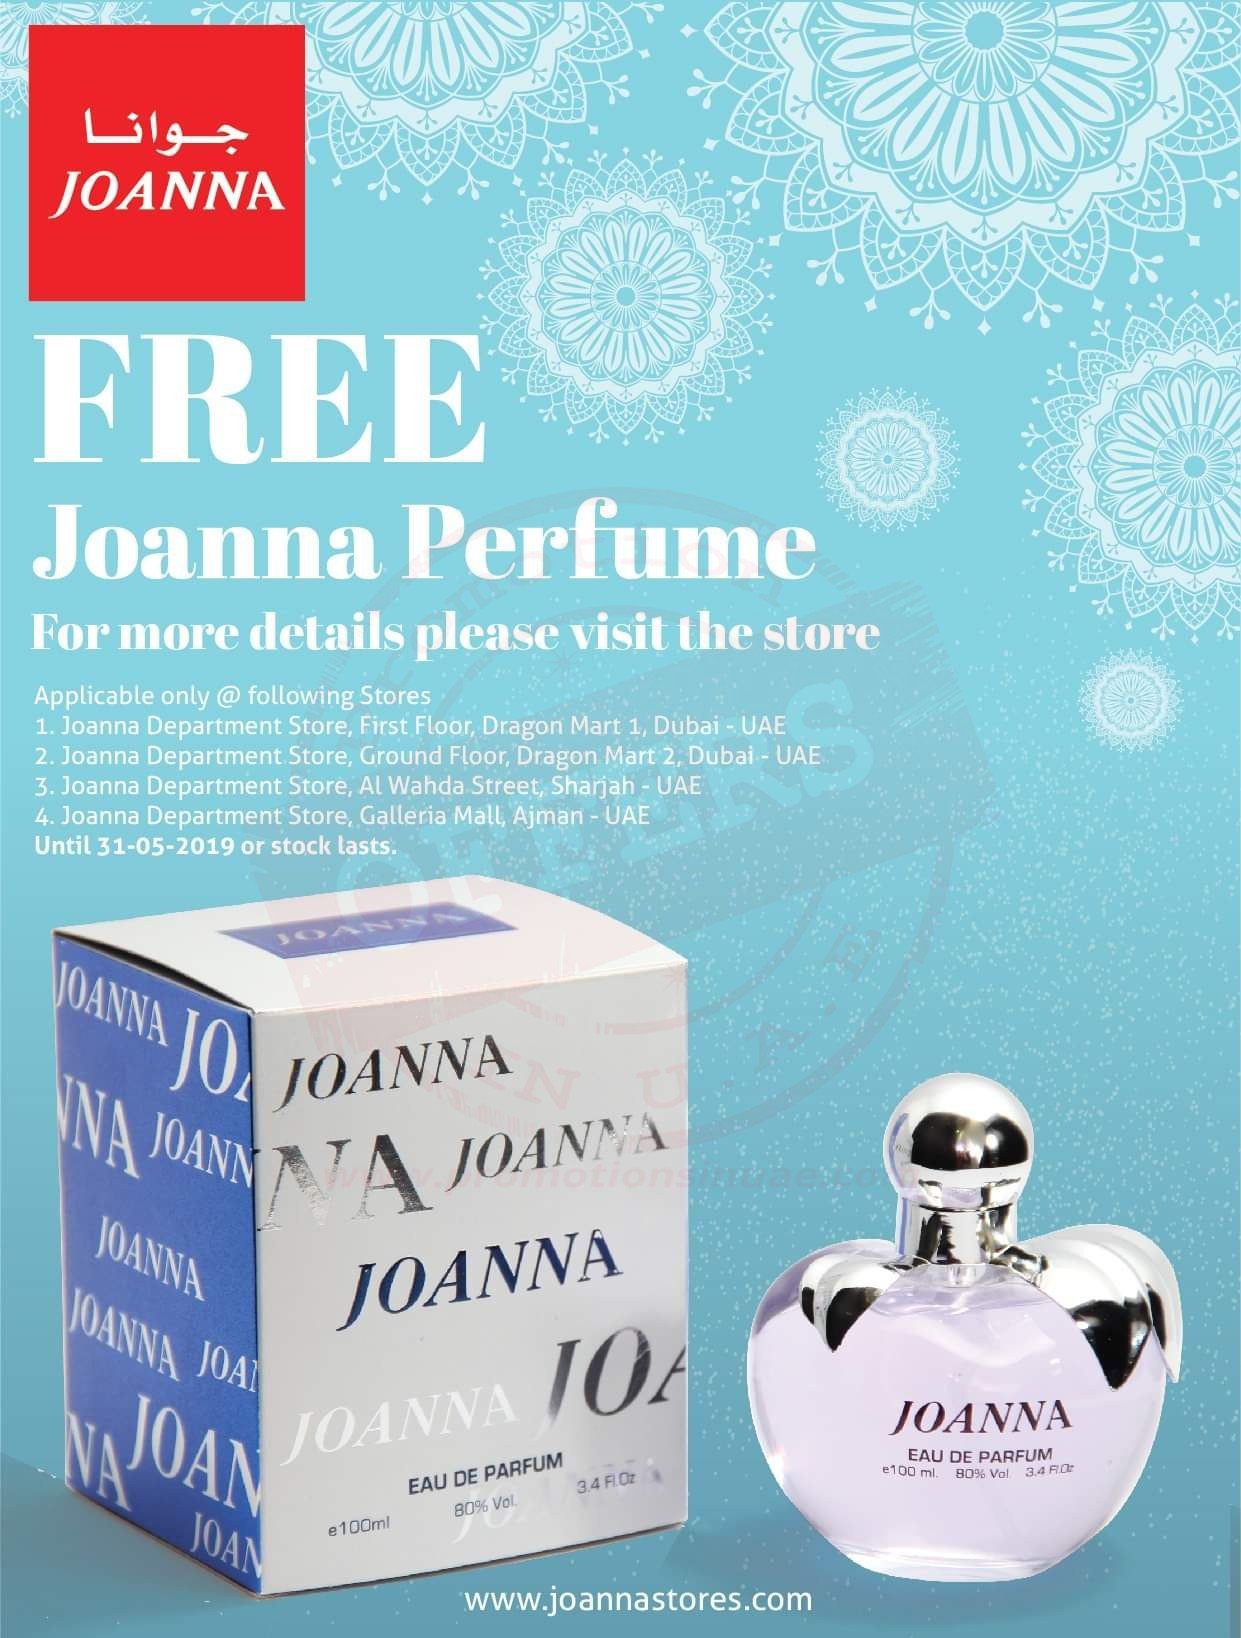 FREE JOANNA PERFUME!!!